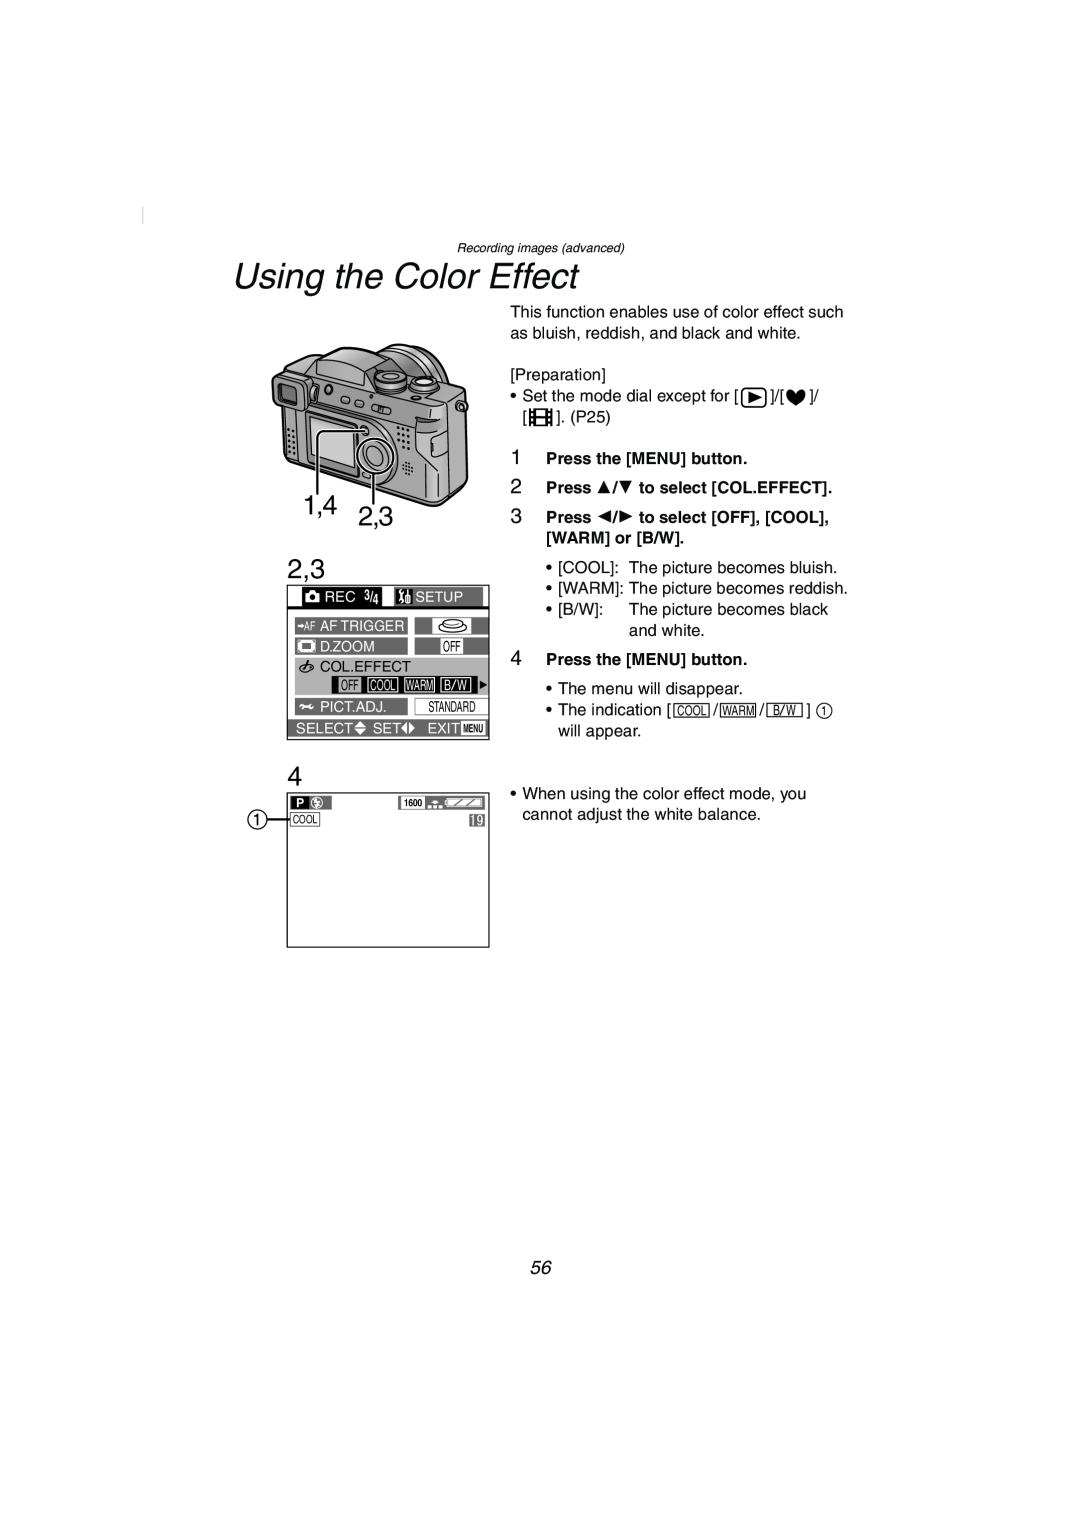 Panasonic DMC-FZ2PP Using the Color Effect, 1,4 2,3, Press the MENU button 2 Press 3/4 to select COL.EFFECT 